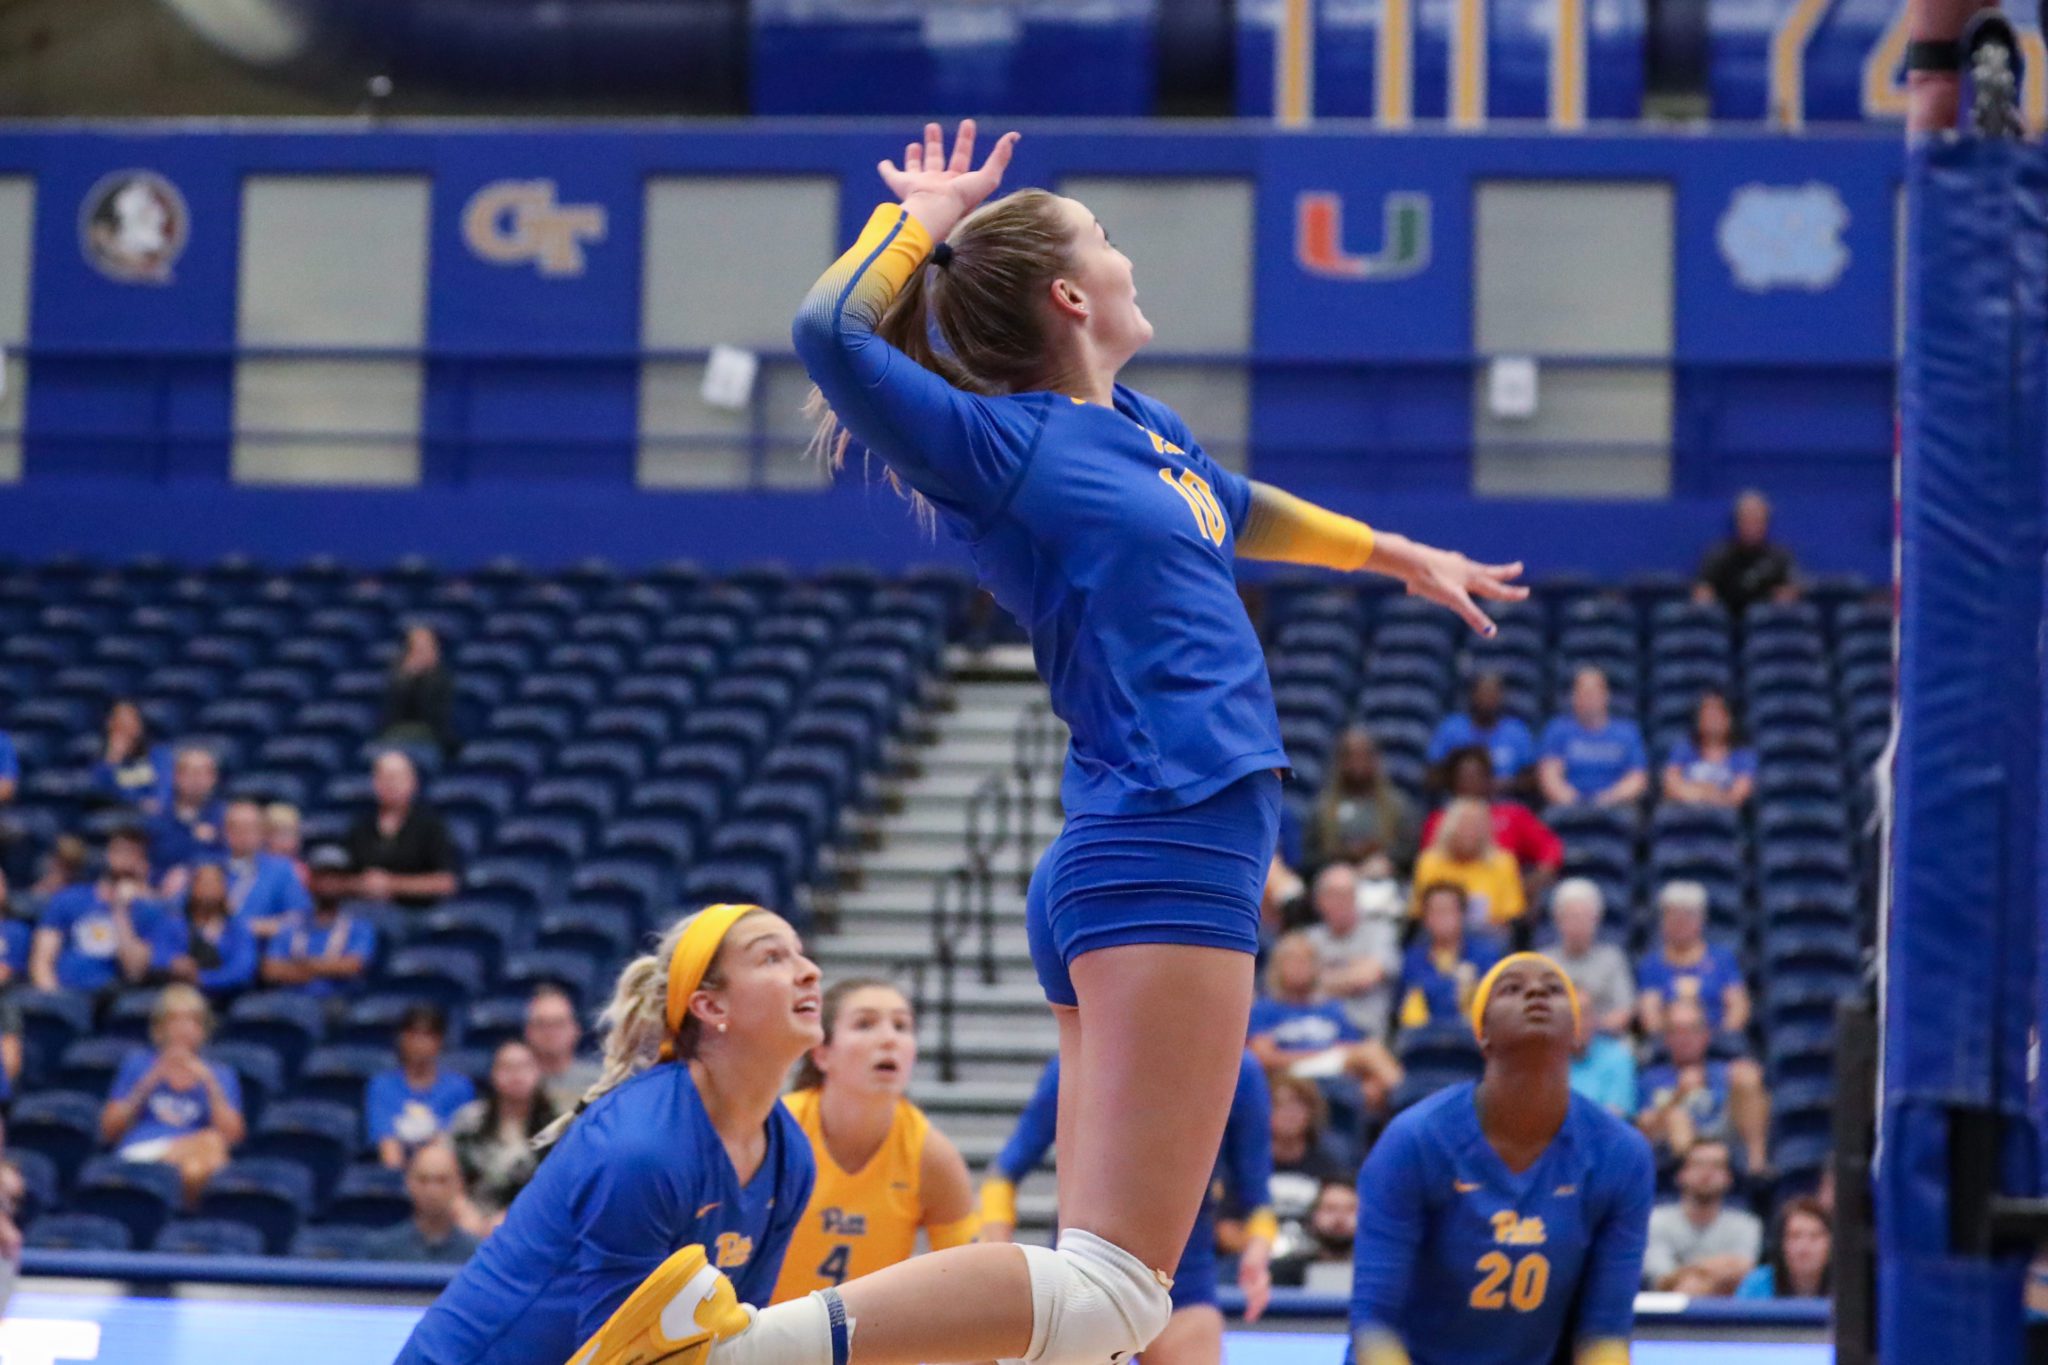 Pitt volleyball setter Rachel Fairbanks